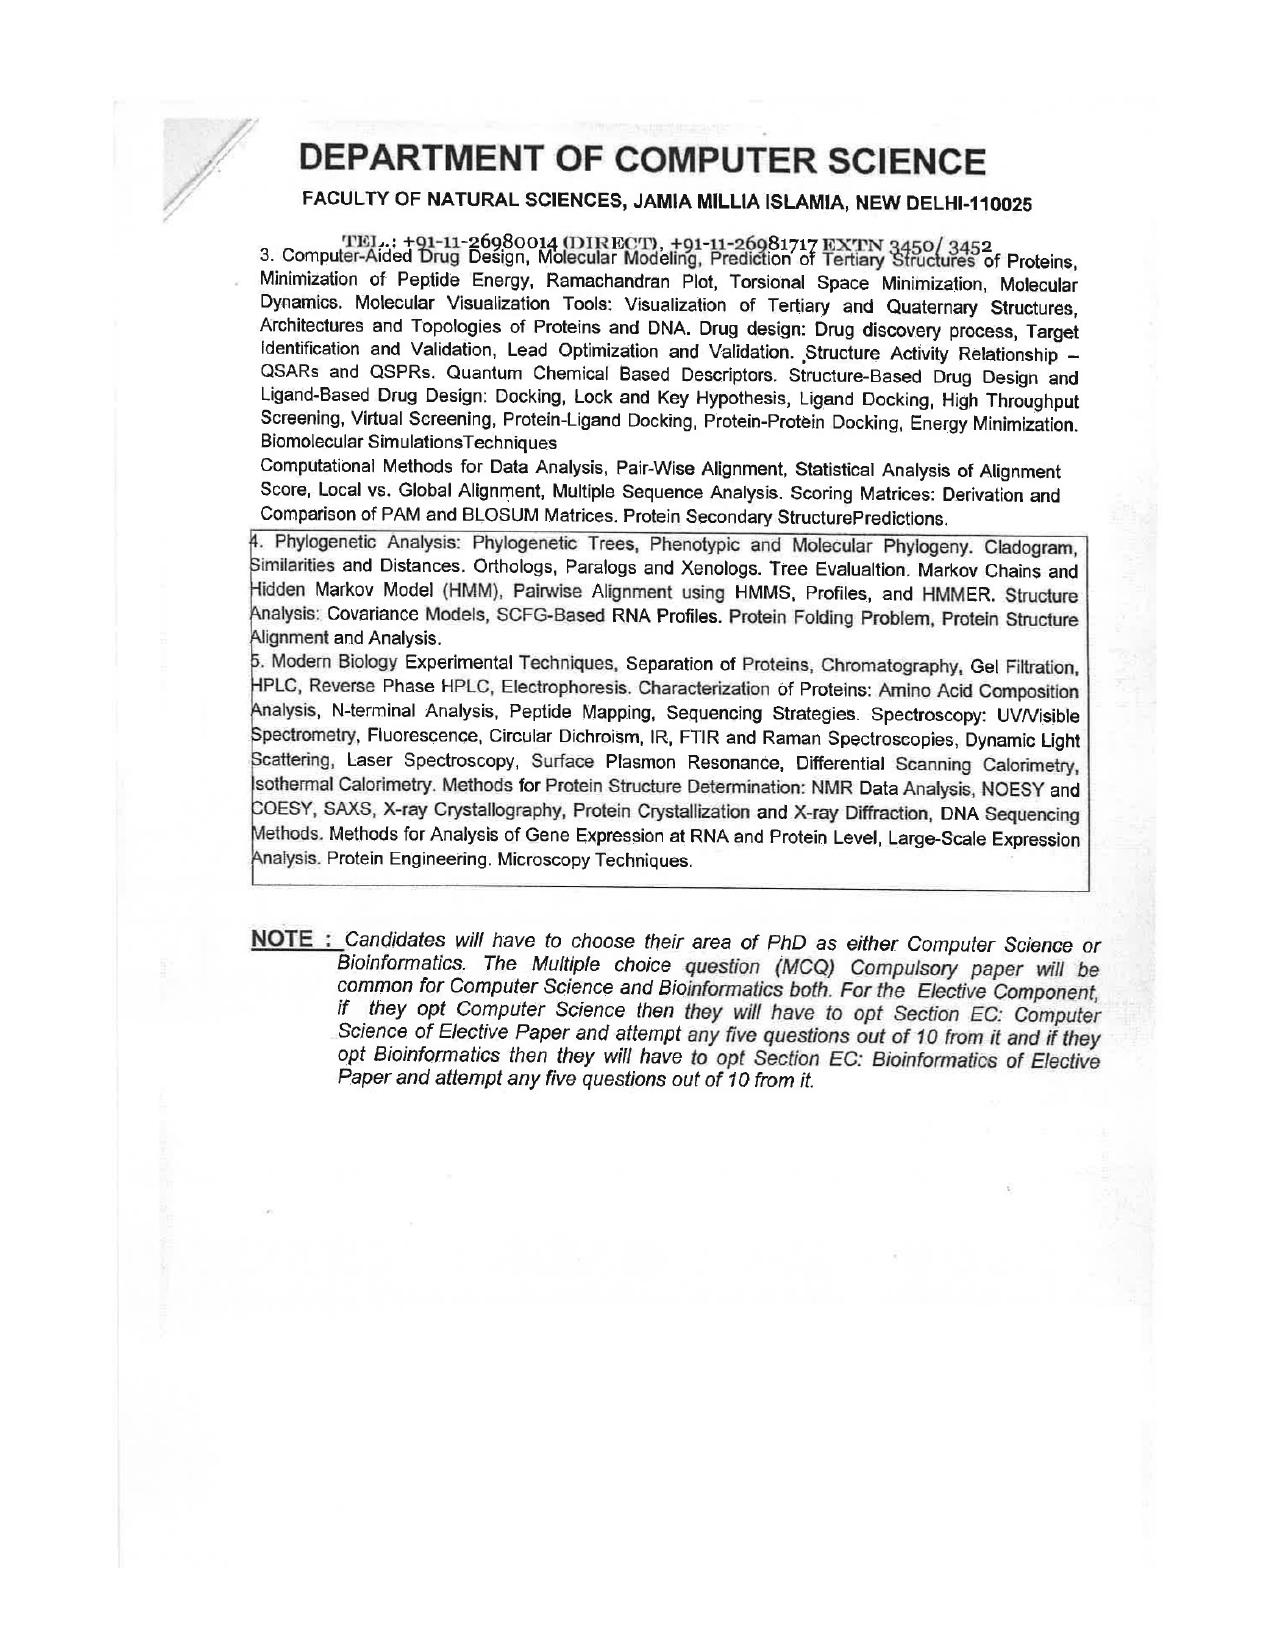 JMI Entrance Exam FACULTY OF NATURAL SCIENCES Syllabus - Page 19